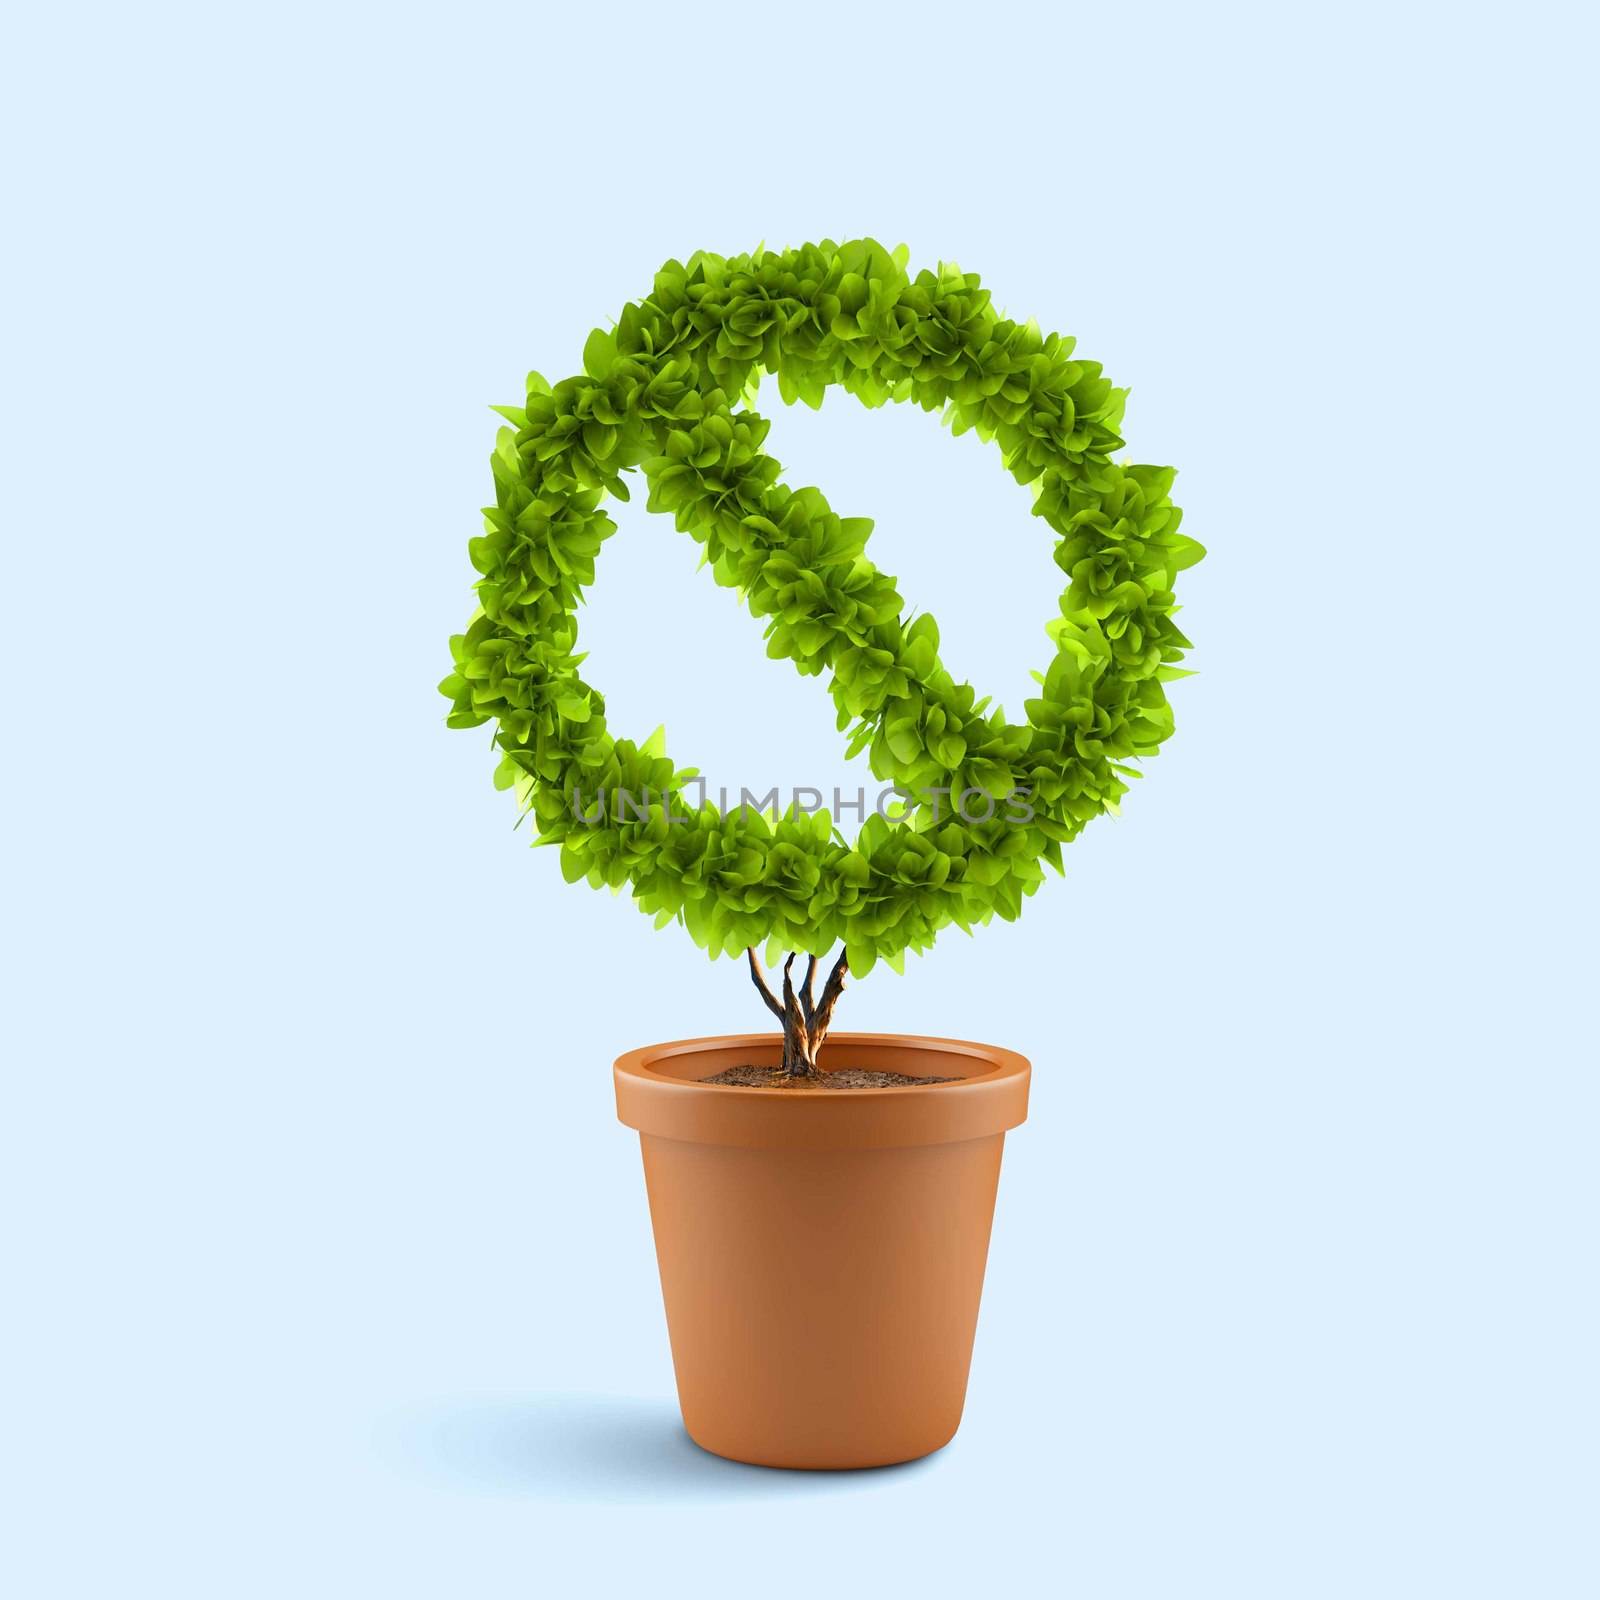 Image of pot plant shaped like prohibition sign